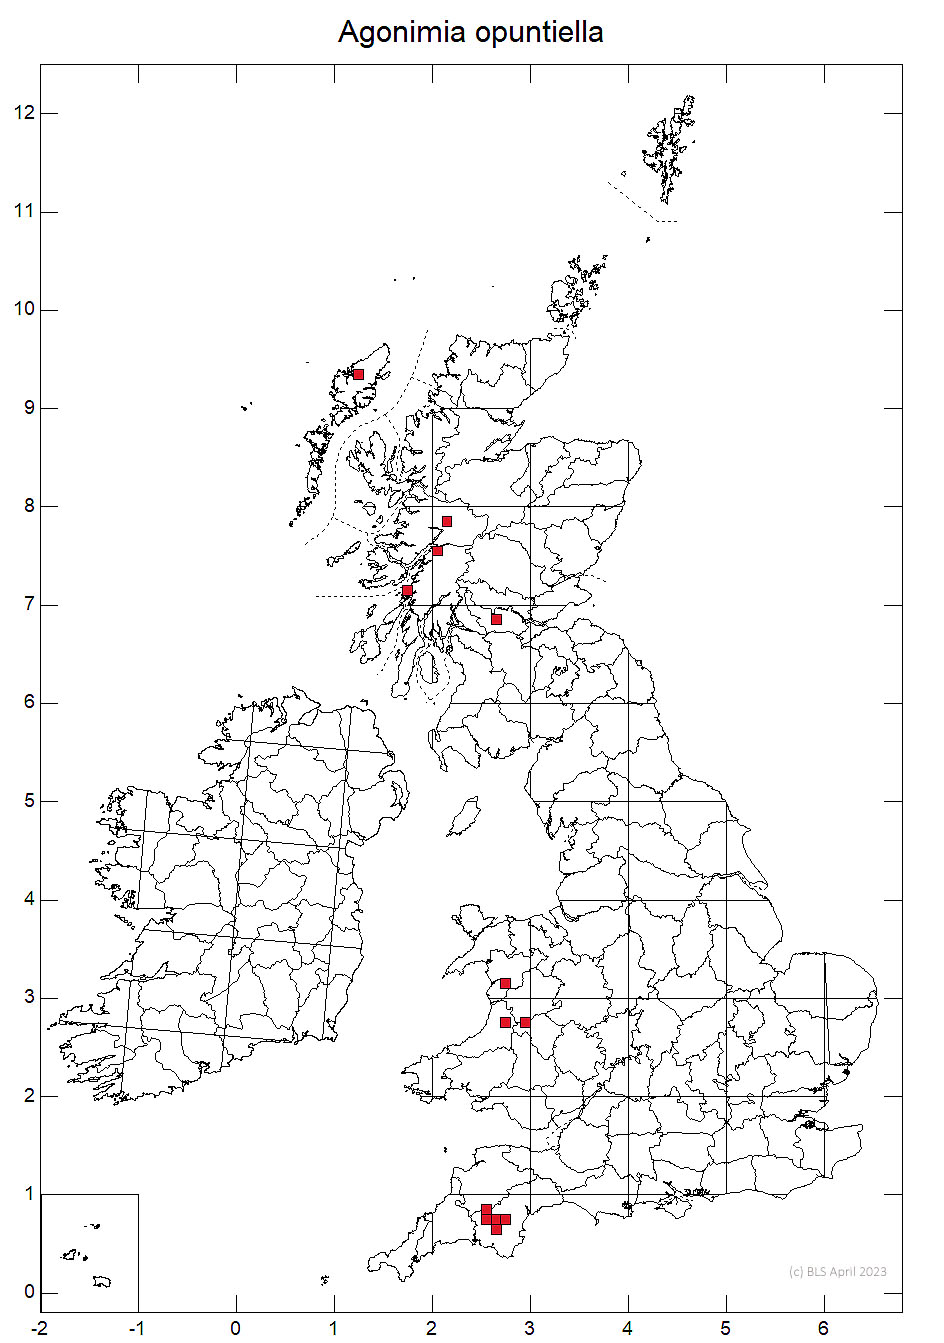 Agonimia opuntiella 10km sq distribution map